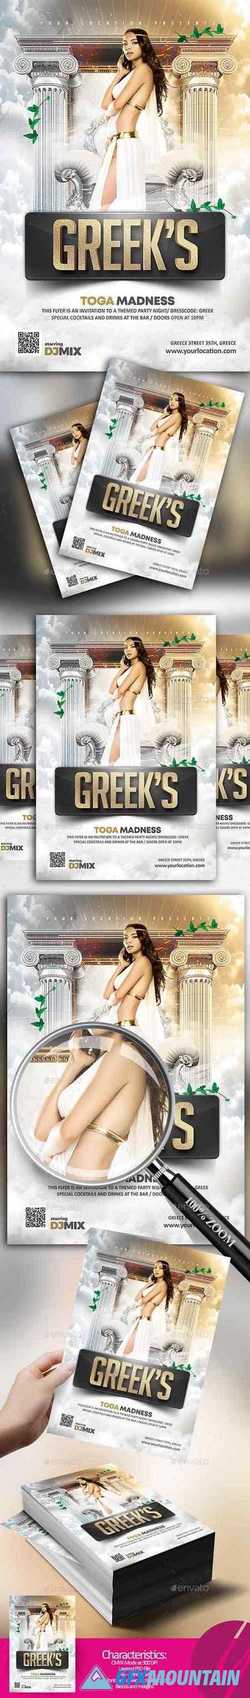 Greeks Toga Madness Flyer 22362288